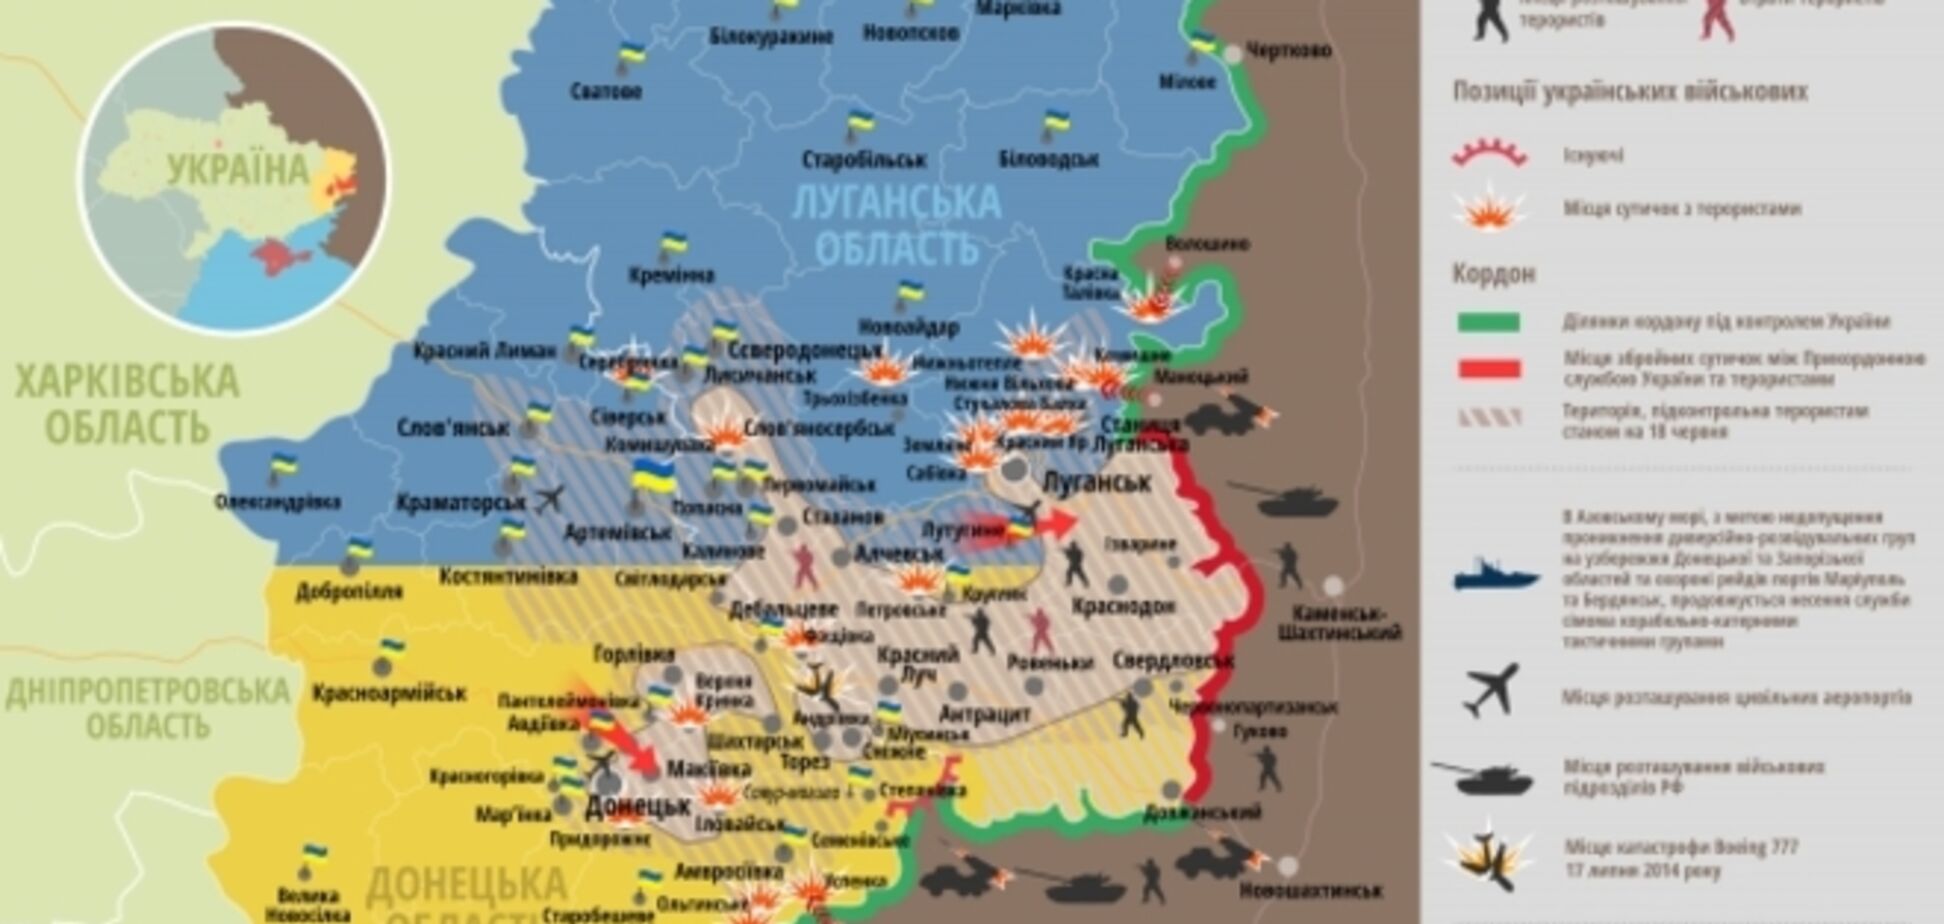 Актуальная карта сражений в зоне АТО за 13 августа